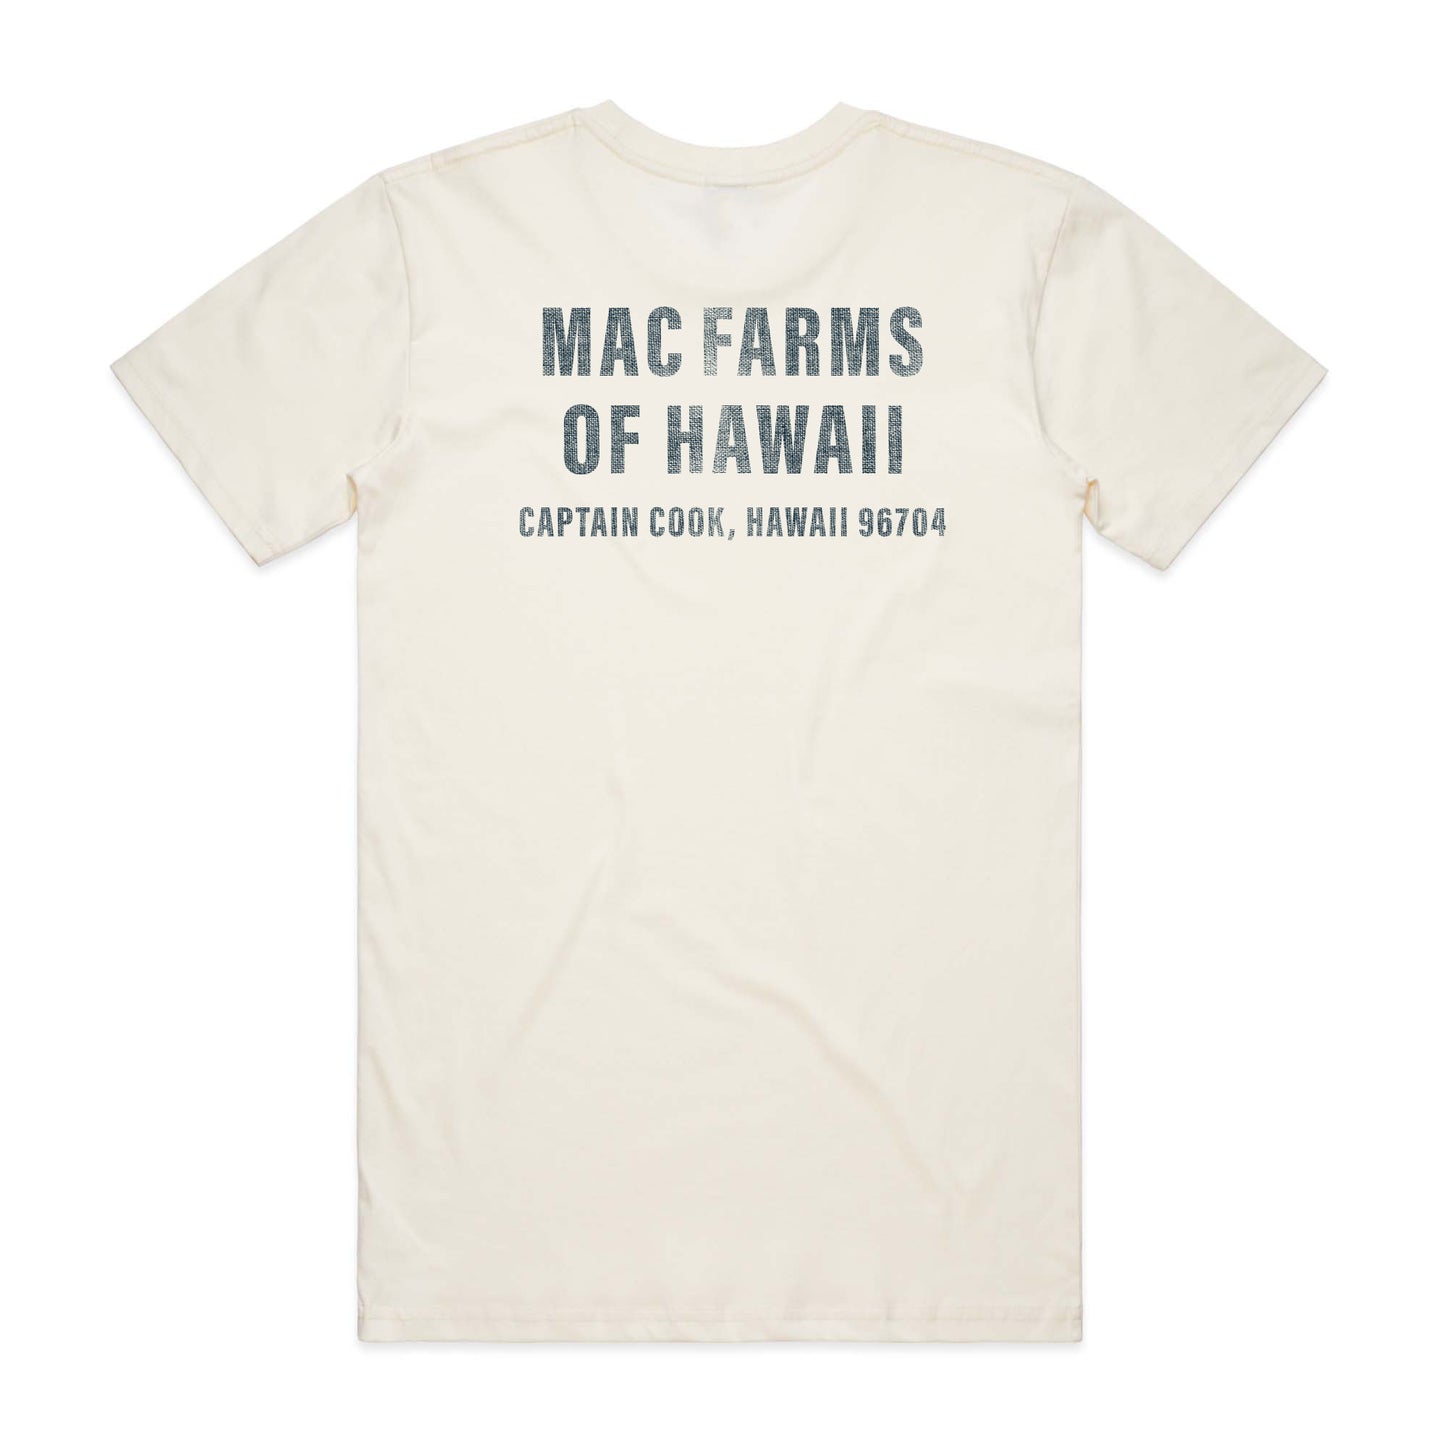 MacFarms vintage white t-shirt with burlap textured logo